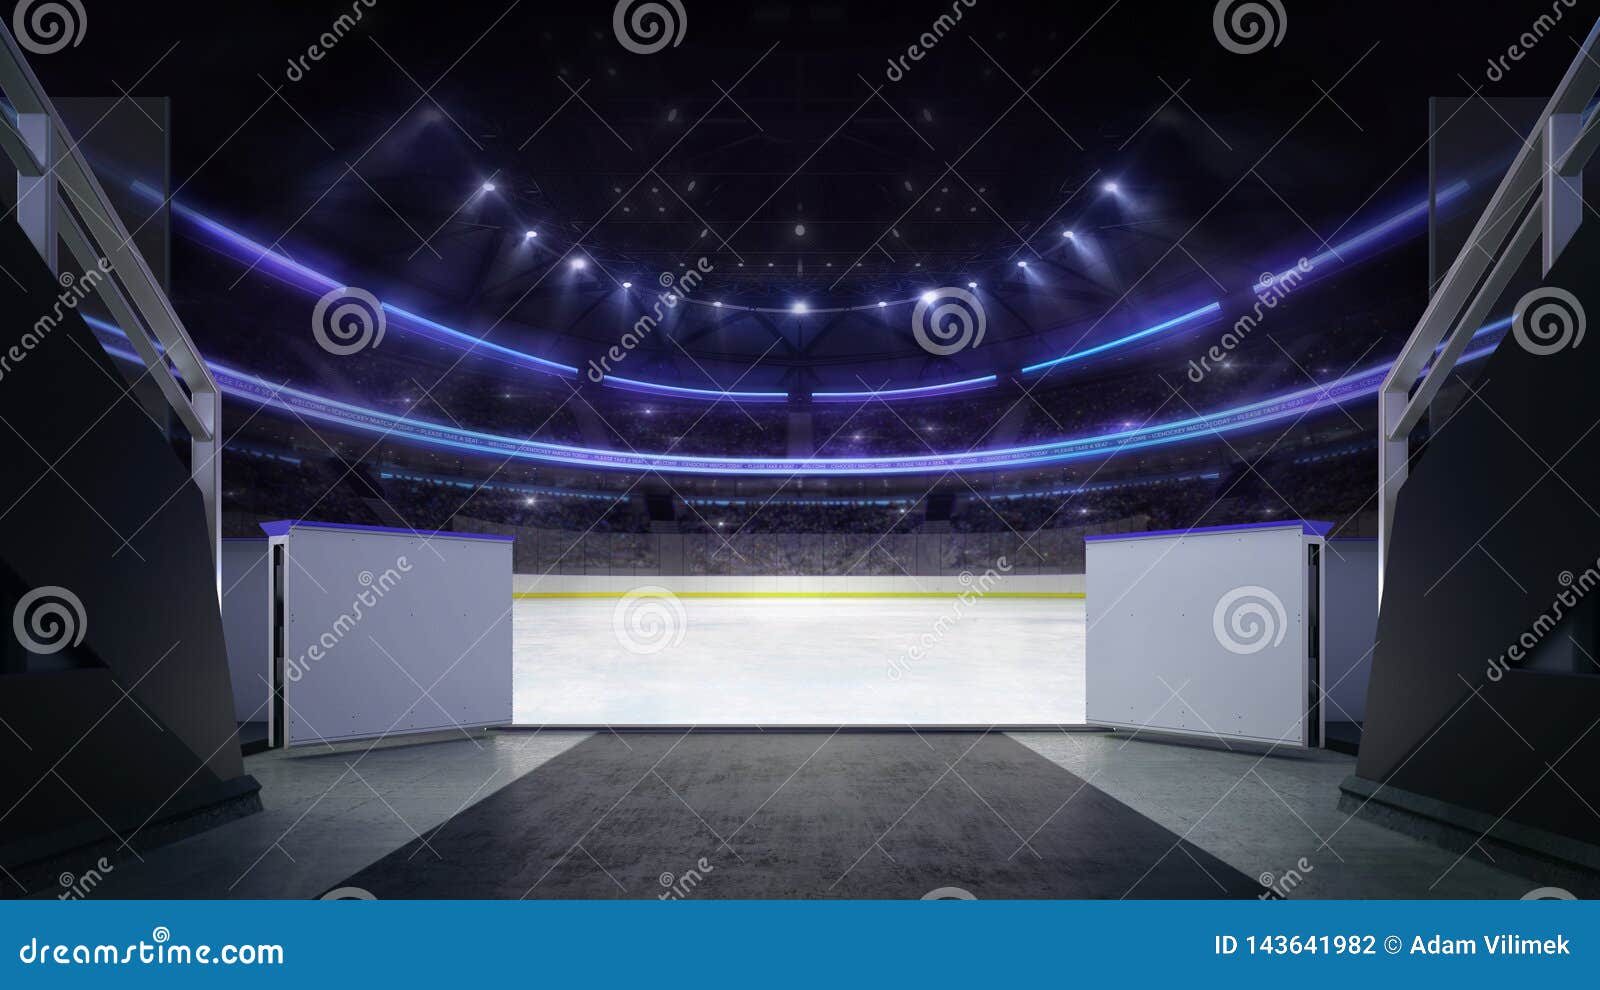 Hockey Stadium Ice Rink Entry Corridor With Blurry Background Stock Illustration - Illustration ...